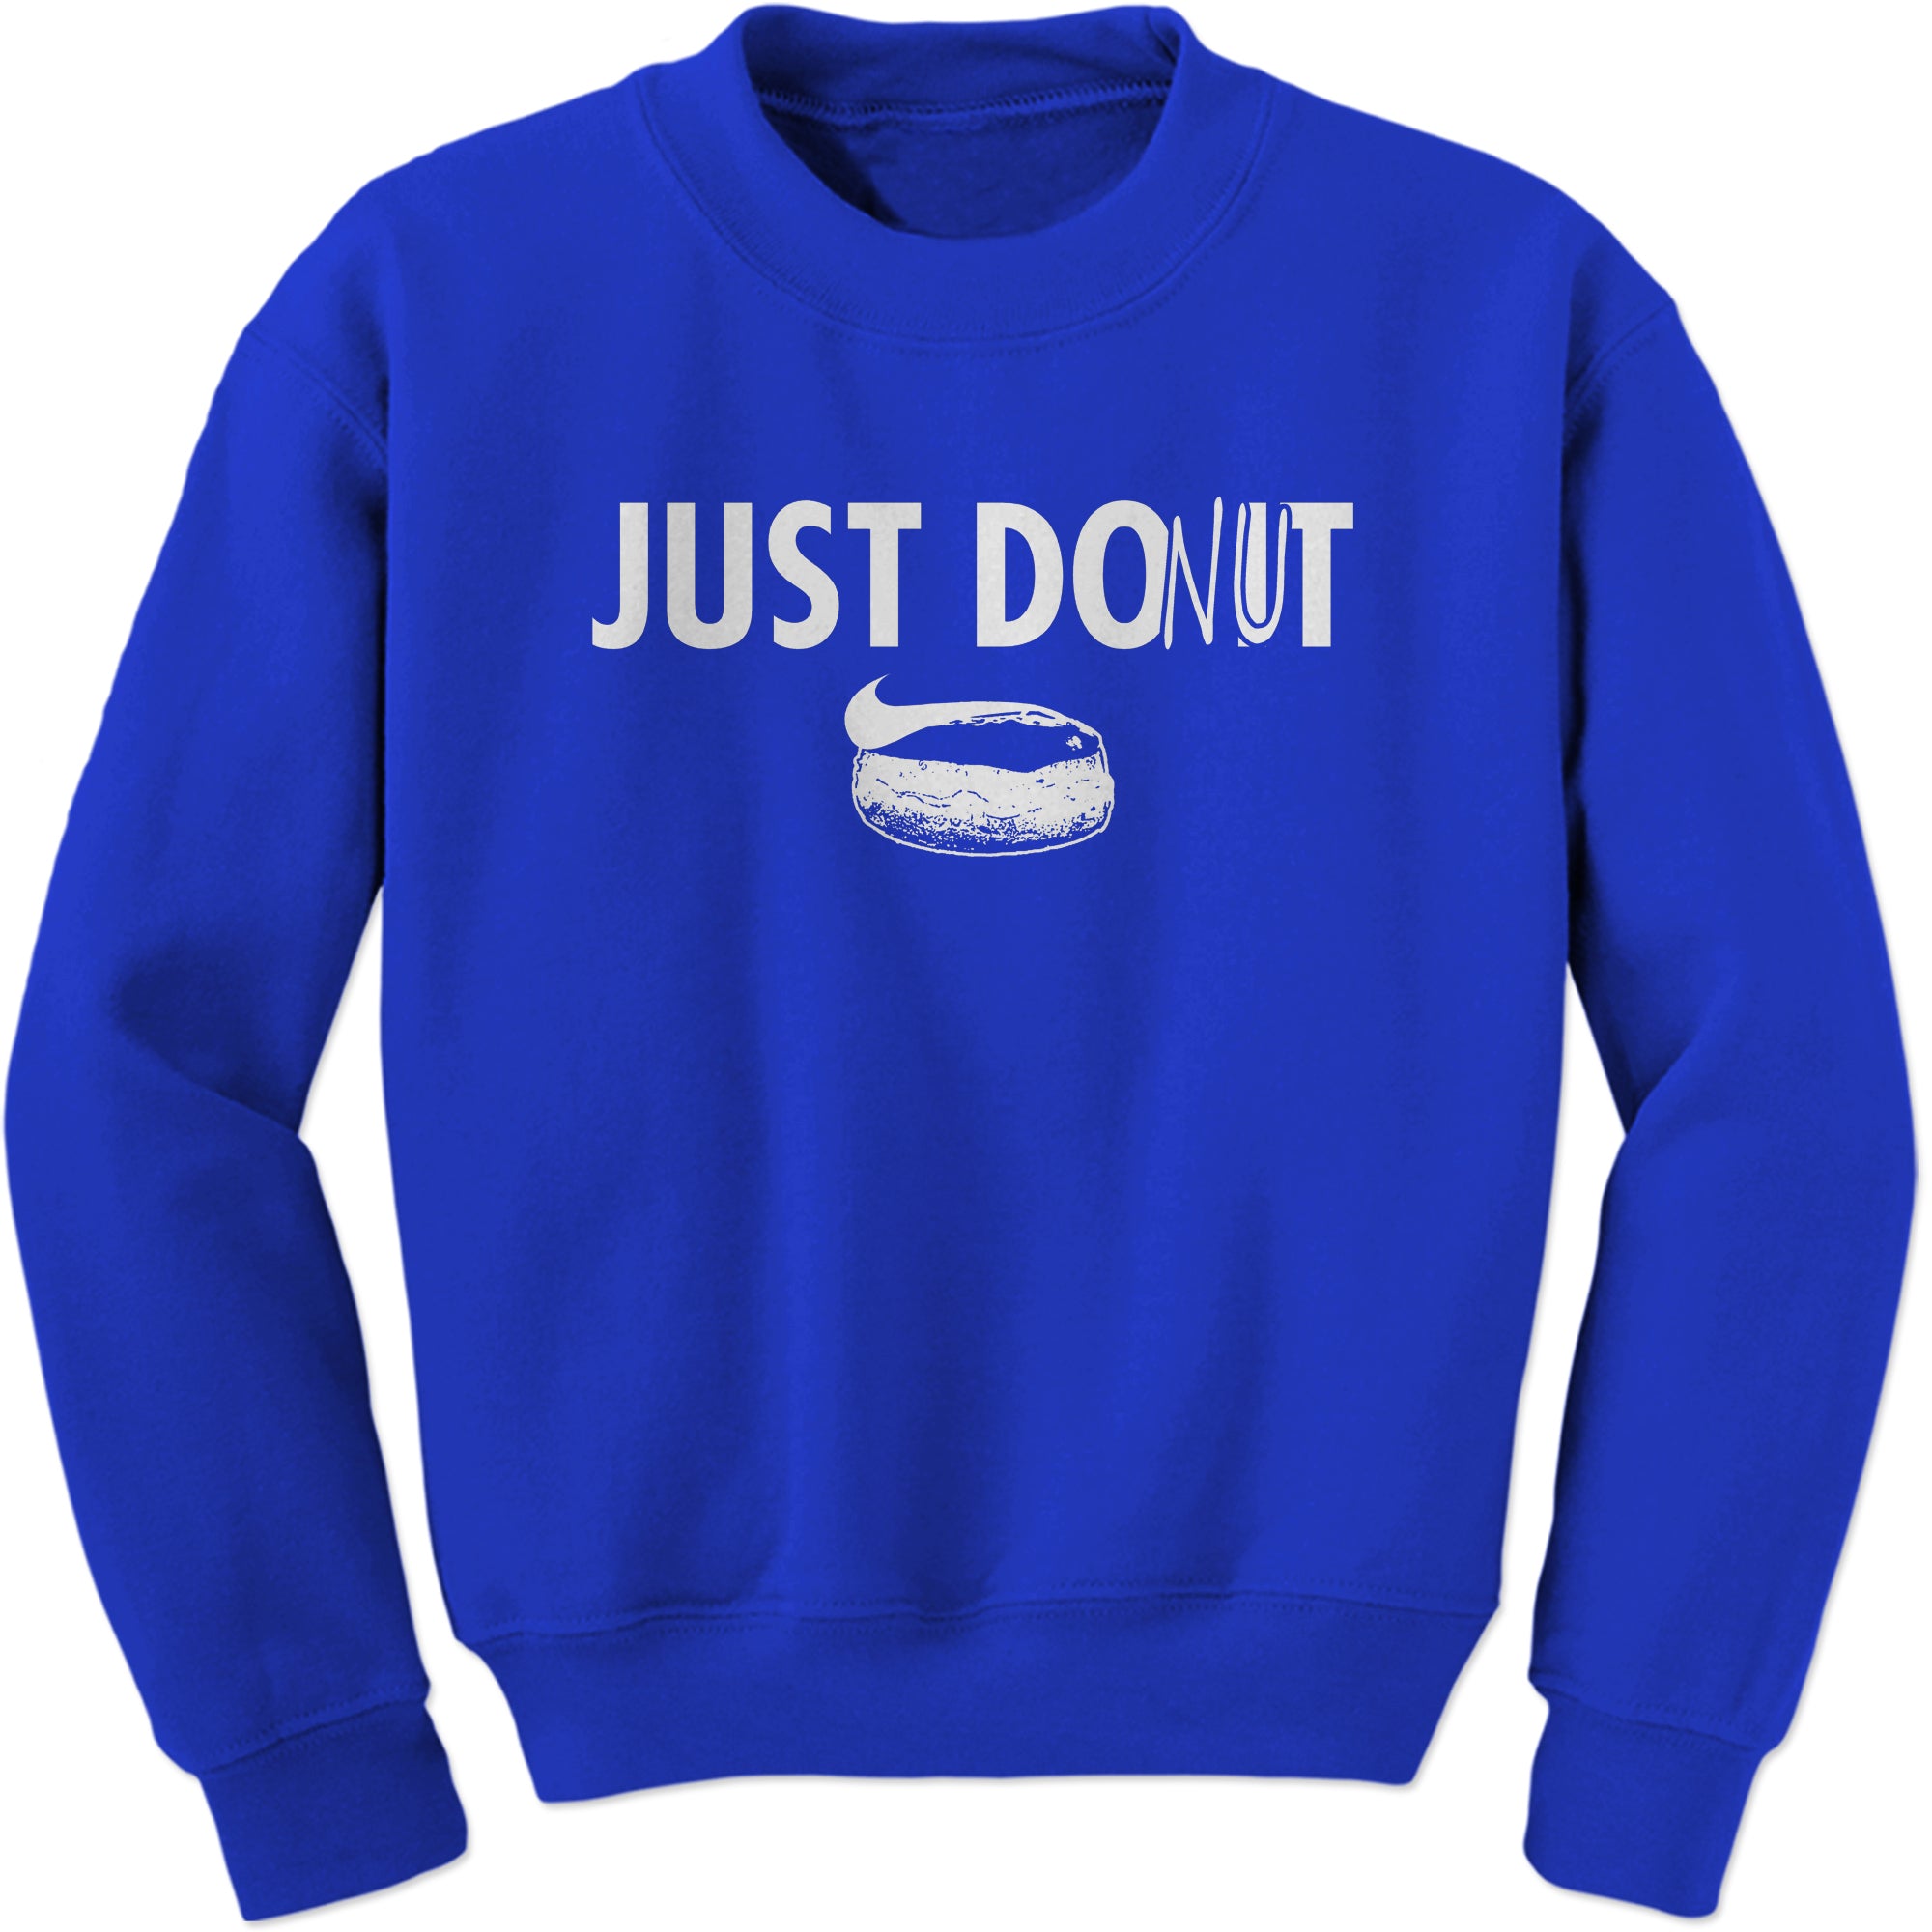 Just Donut Funny Parody Do It Later Sweatshirt